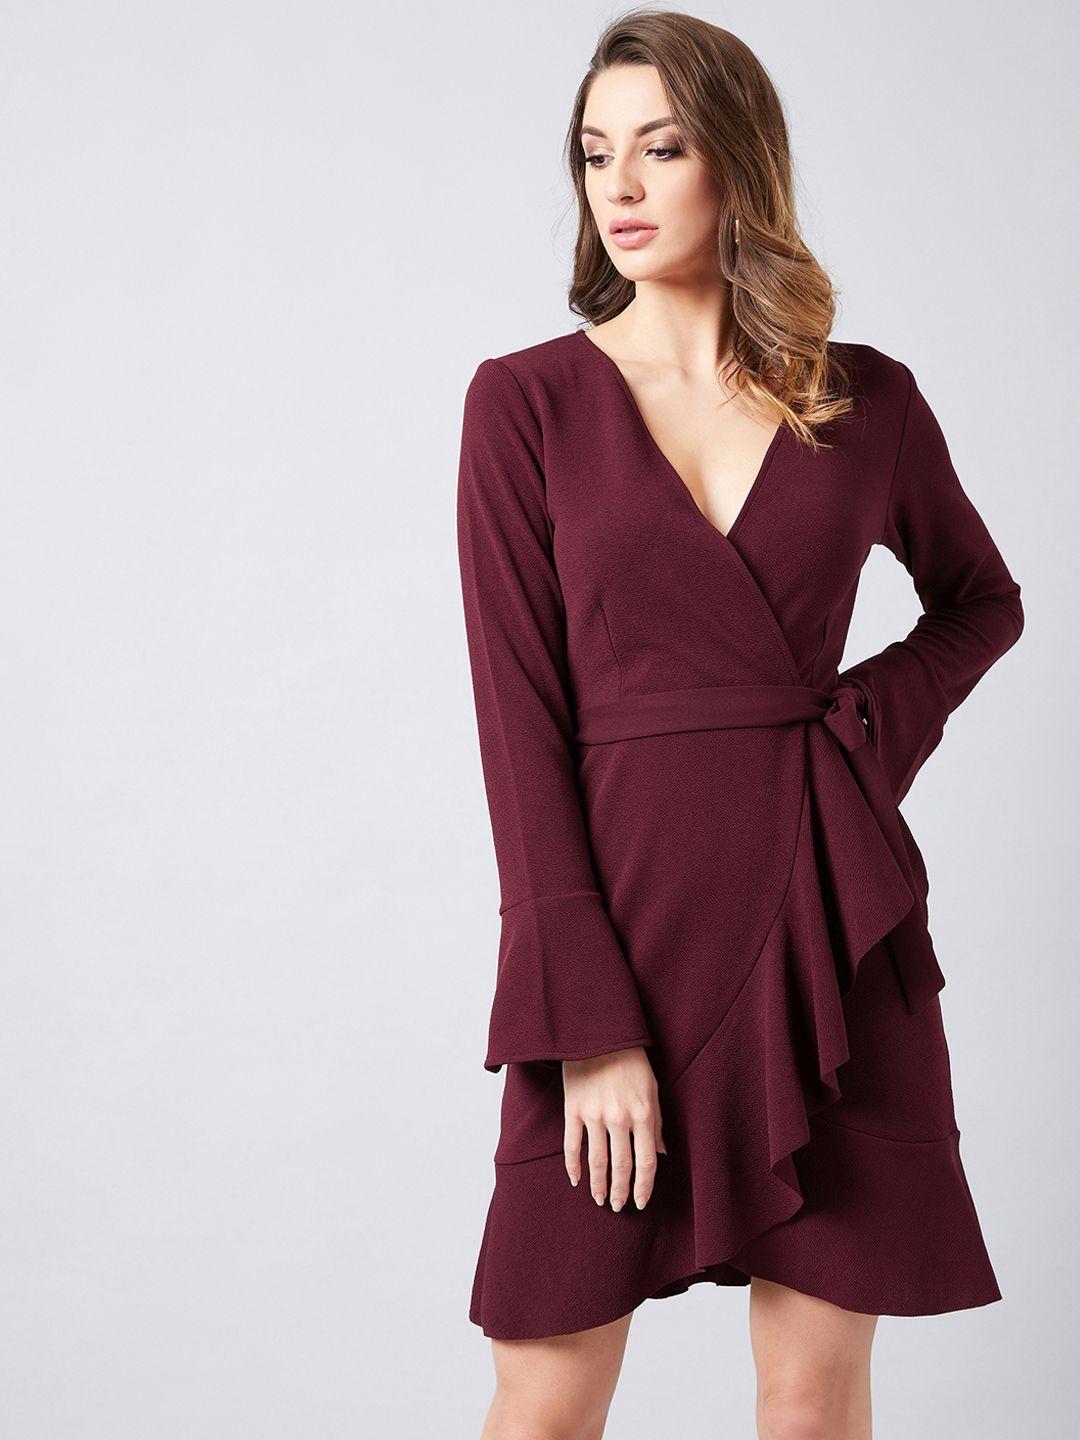 athena-burgundy-v-neck-wrap-dress